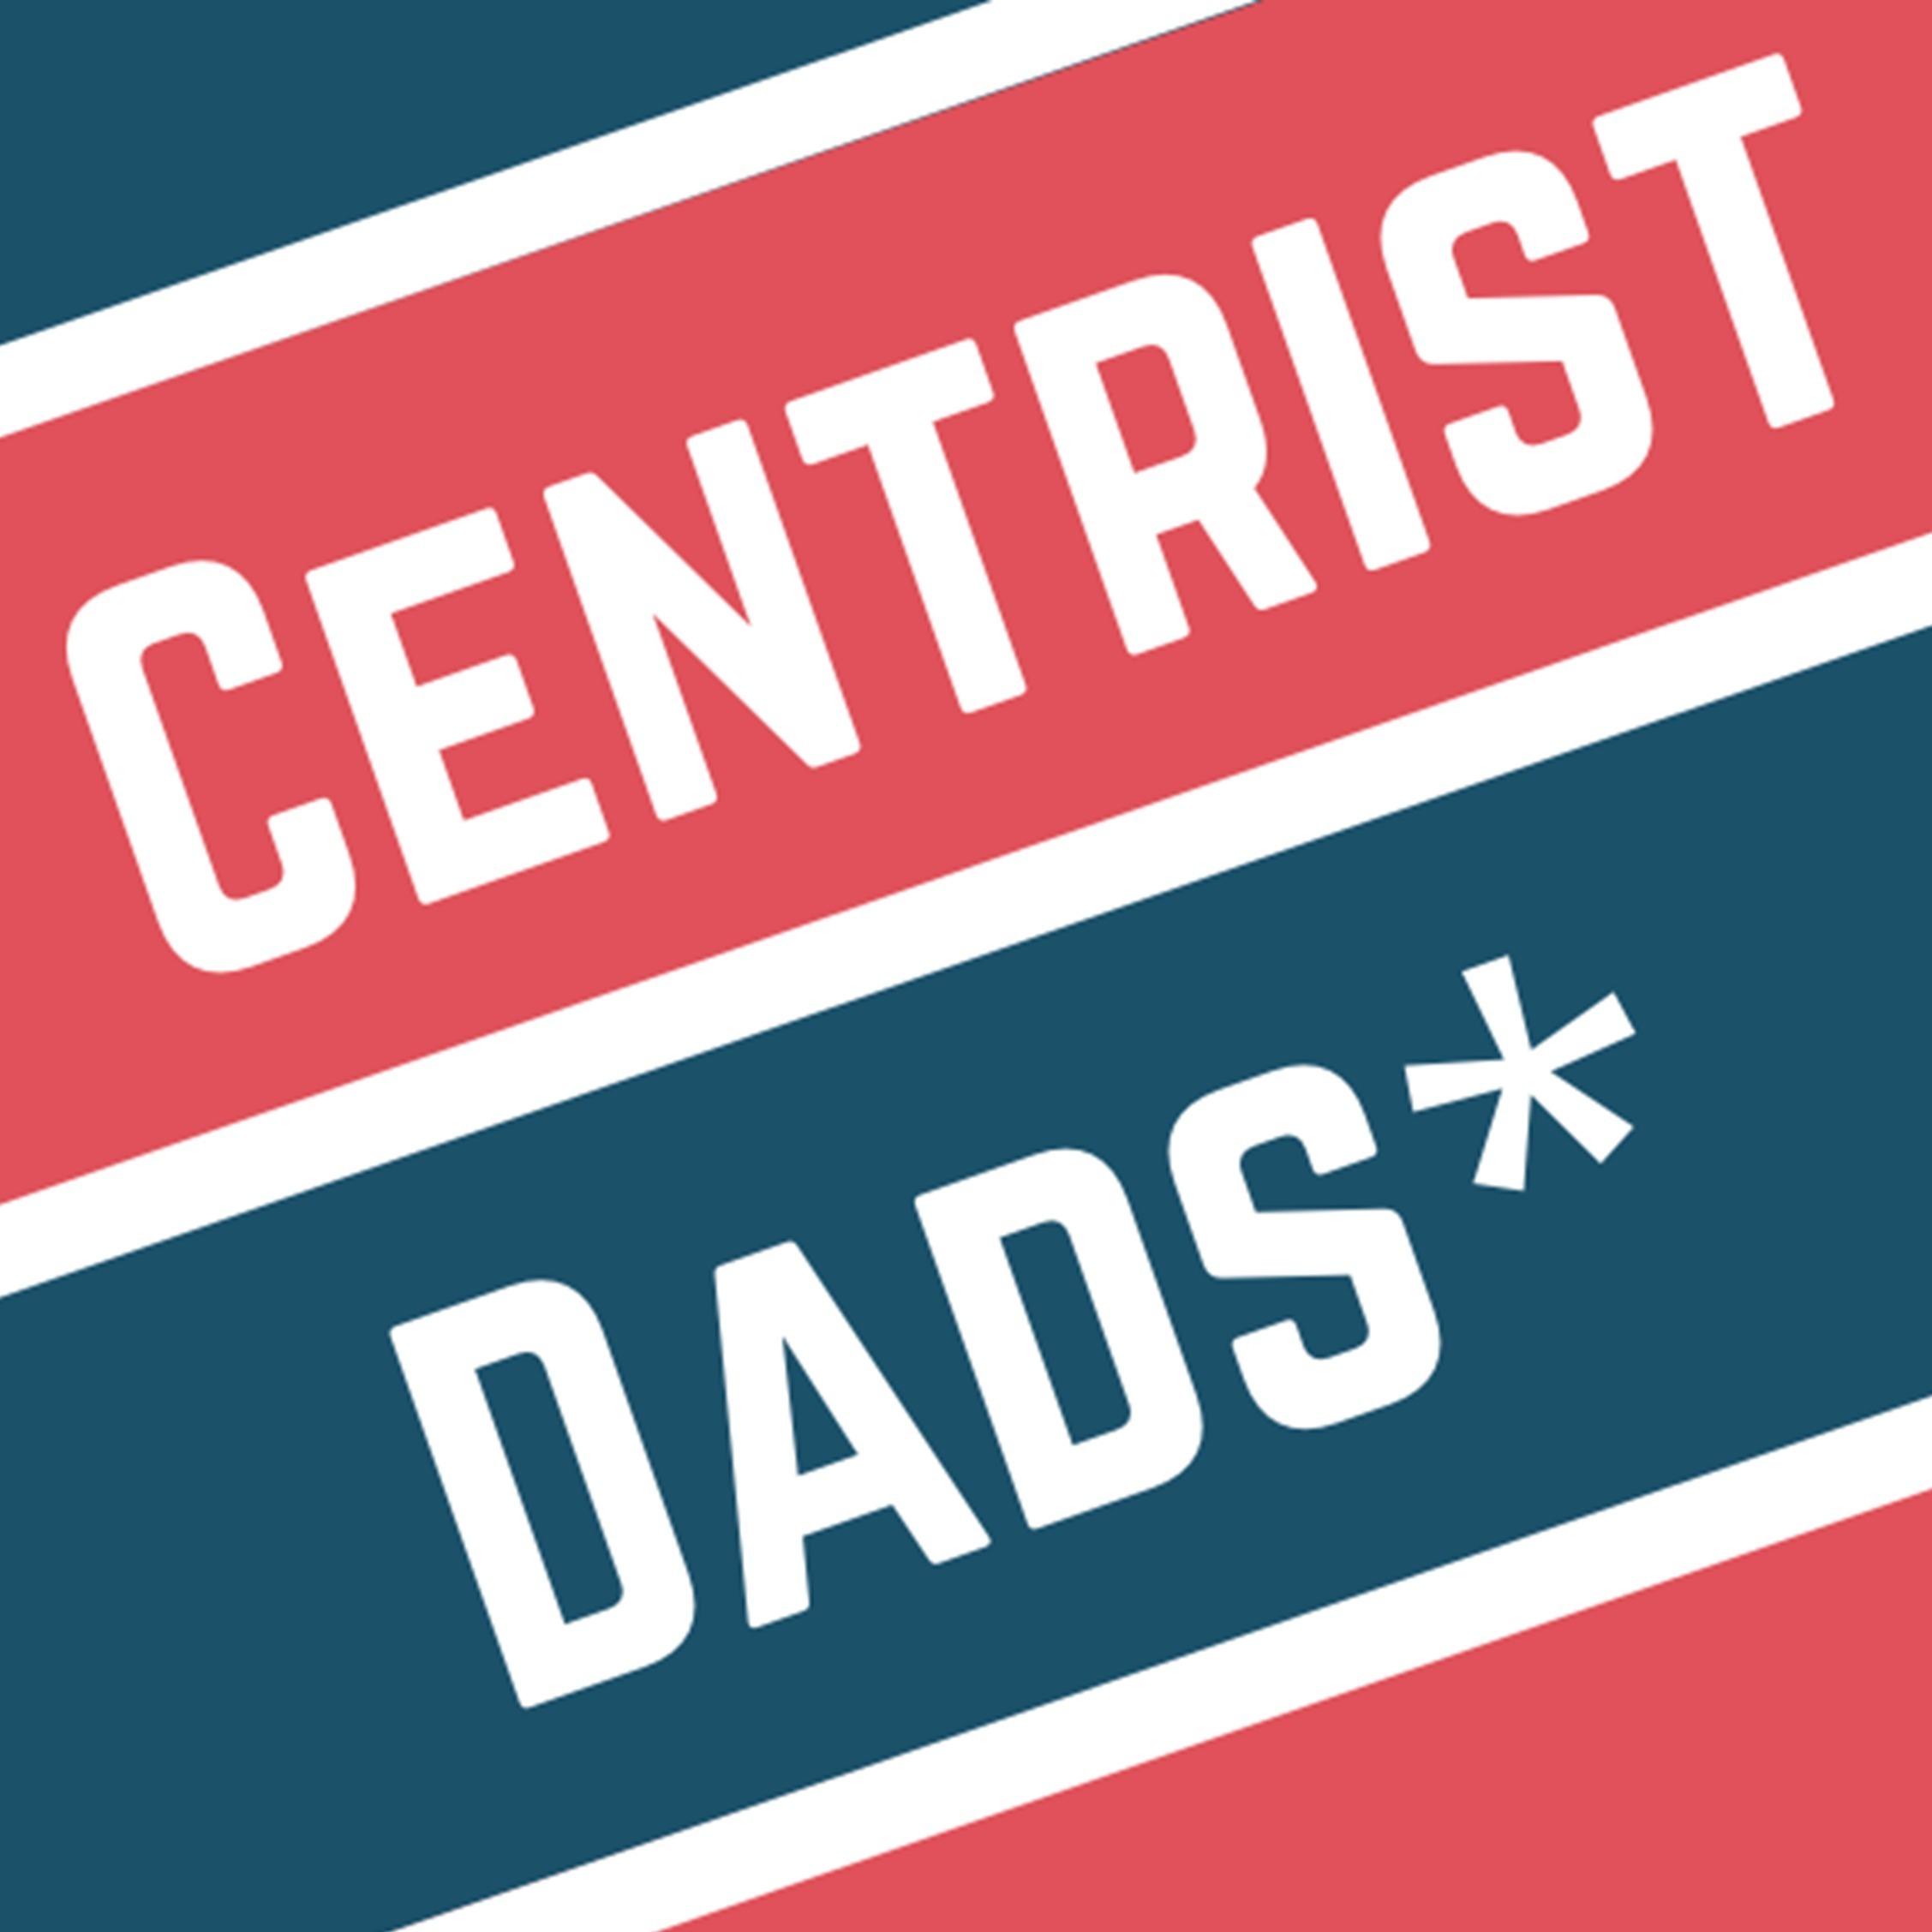 Centrist Dads